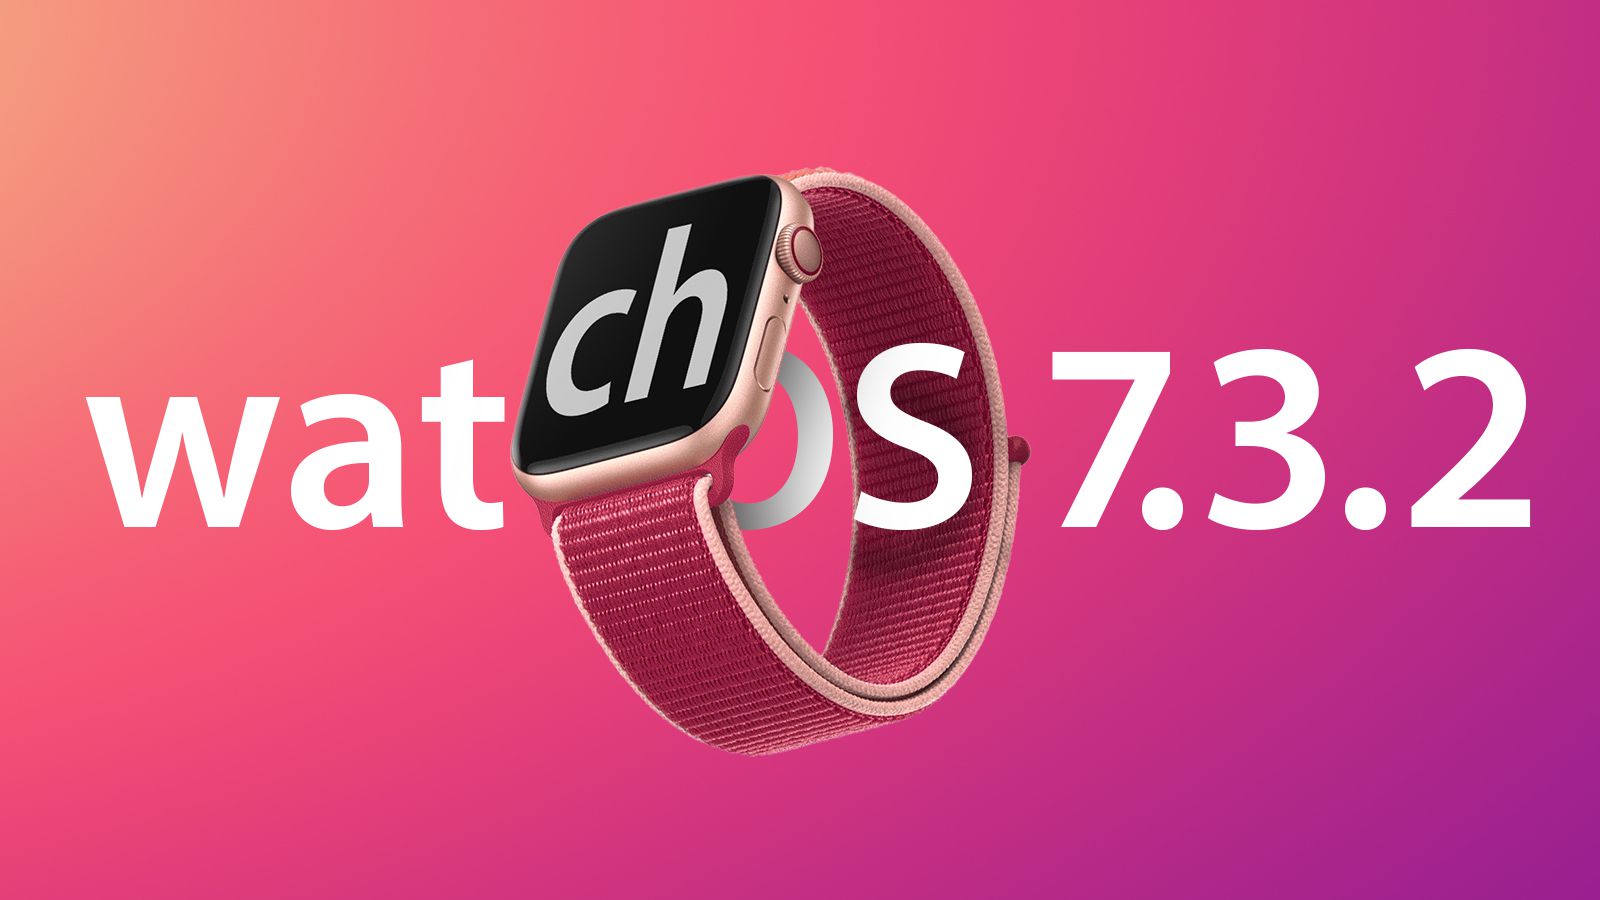 Apple Releases watchOS 7.3.2 With Security Updates - MacRumors